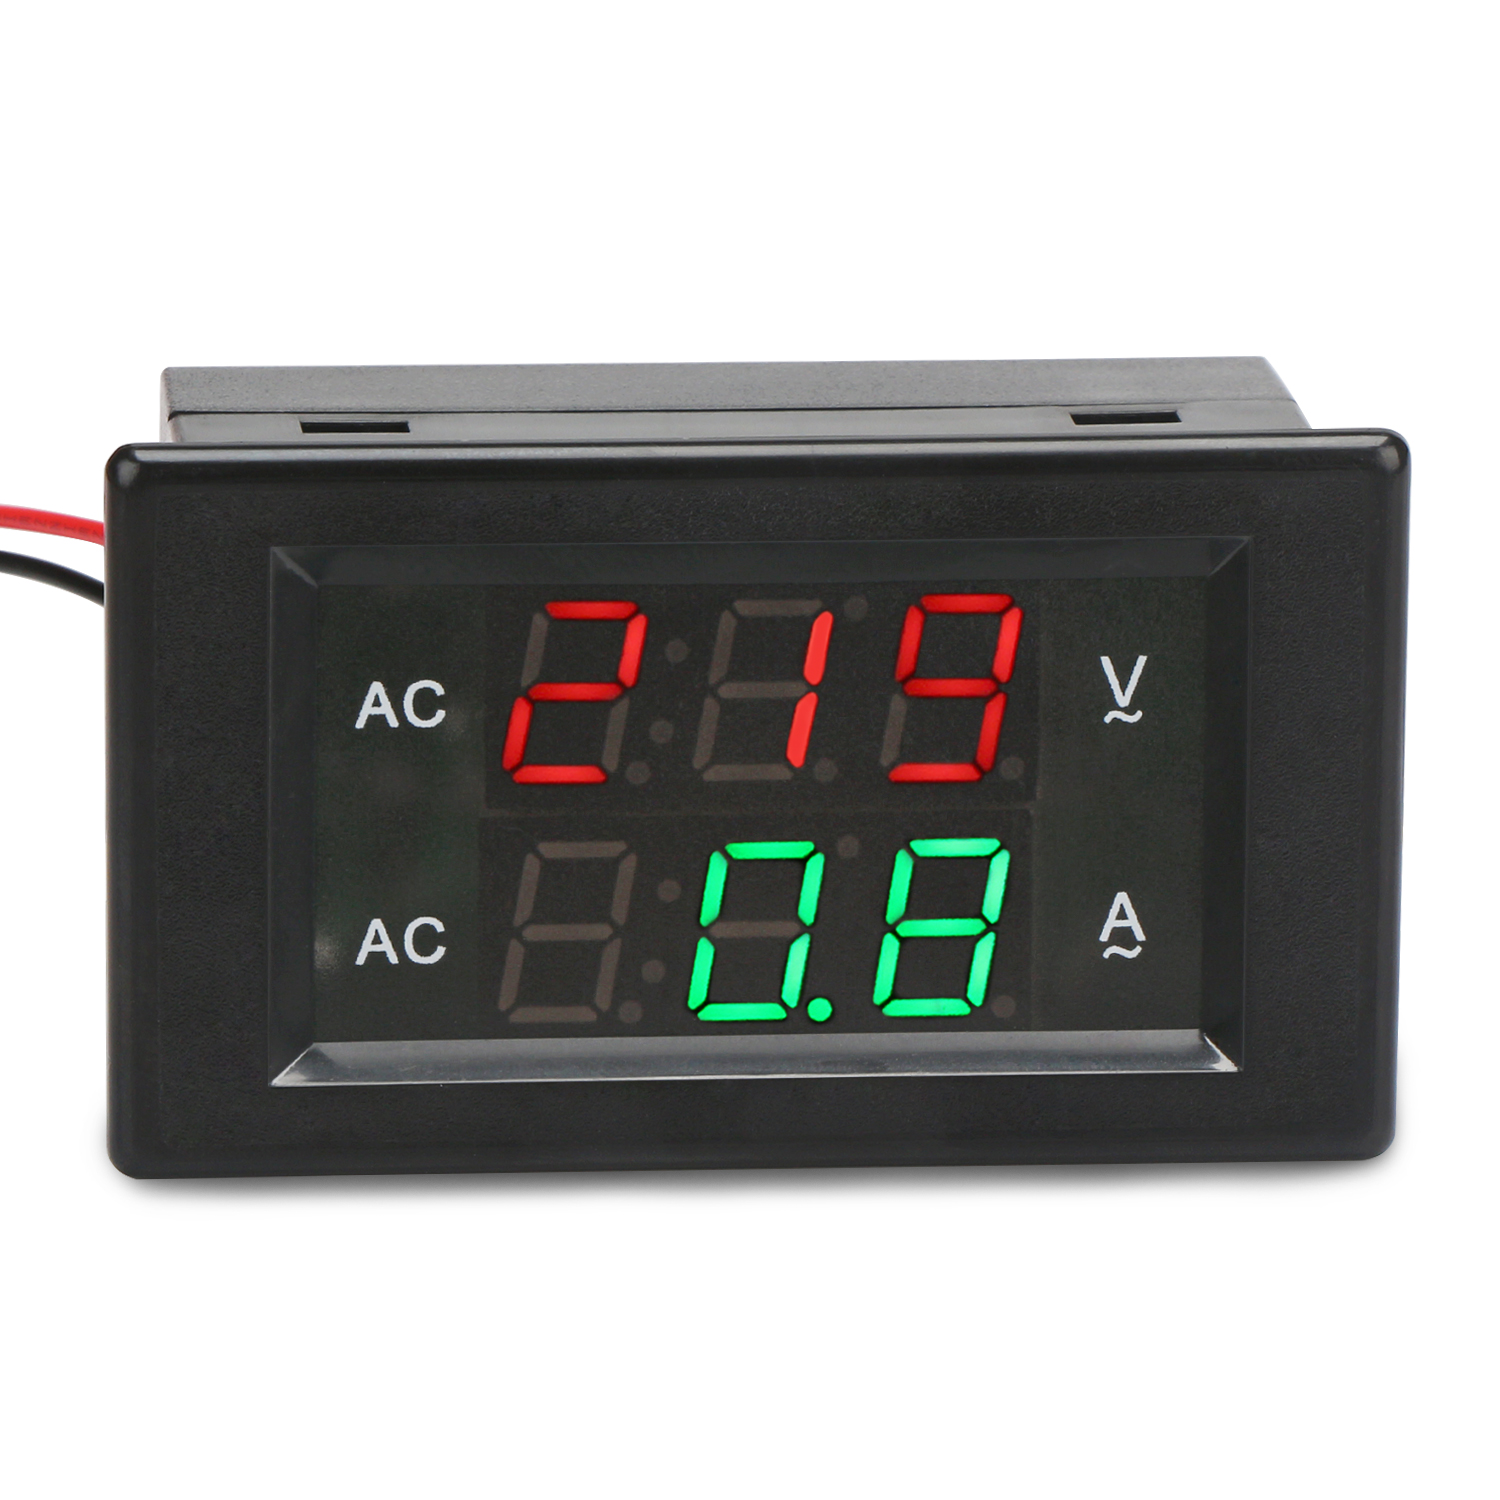 Digital AC100-300V 0-100A LCD DISPLAY PANEL VOLT/AMP Meter WITH 100A SPLIT CT 